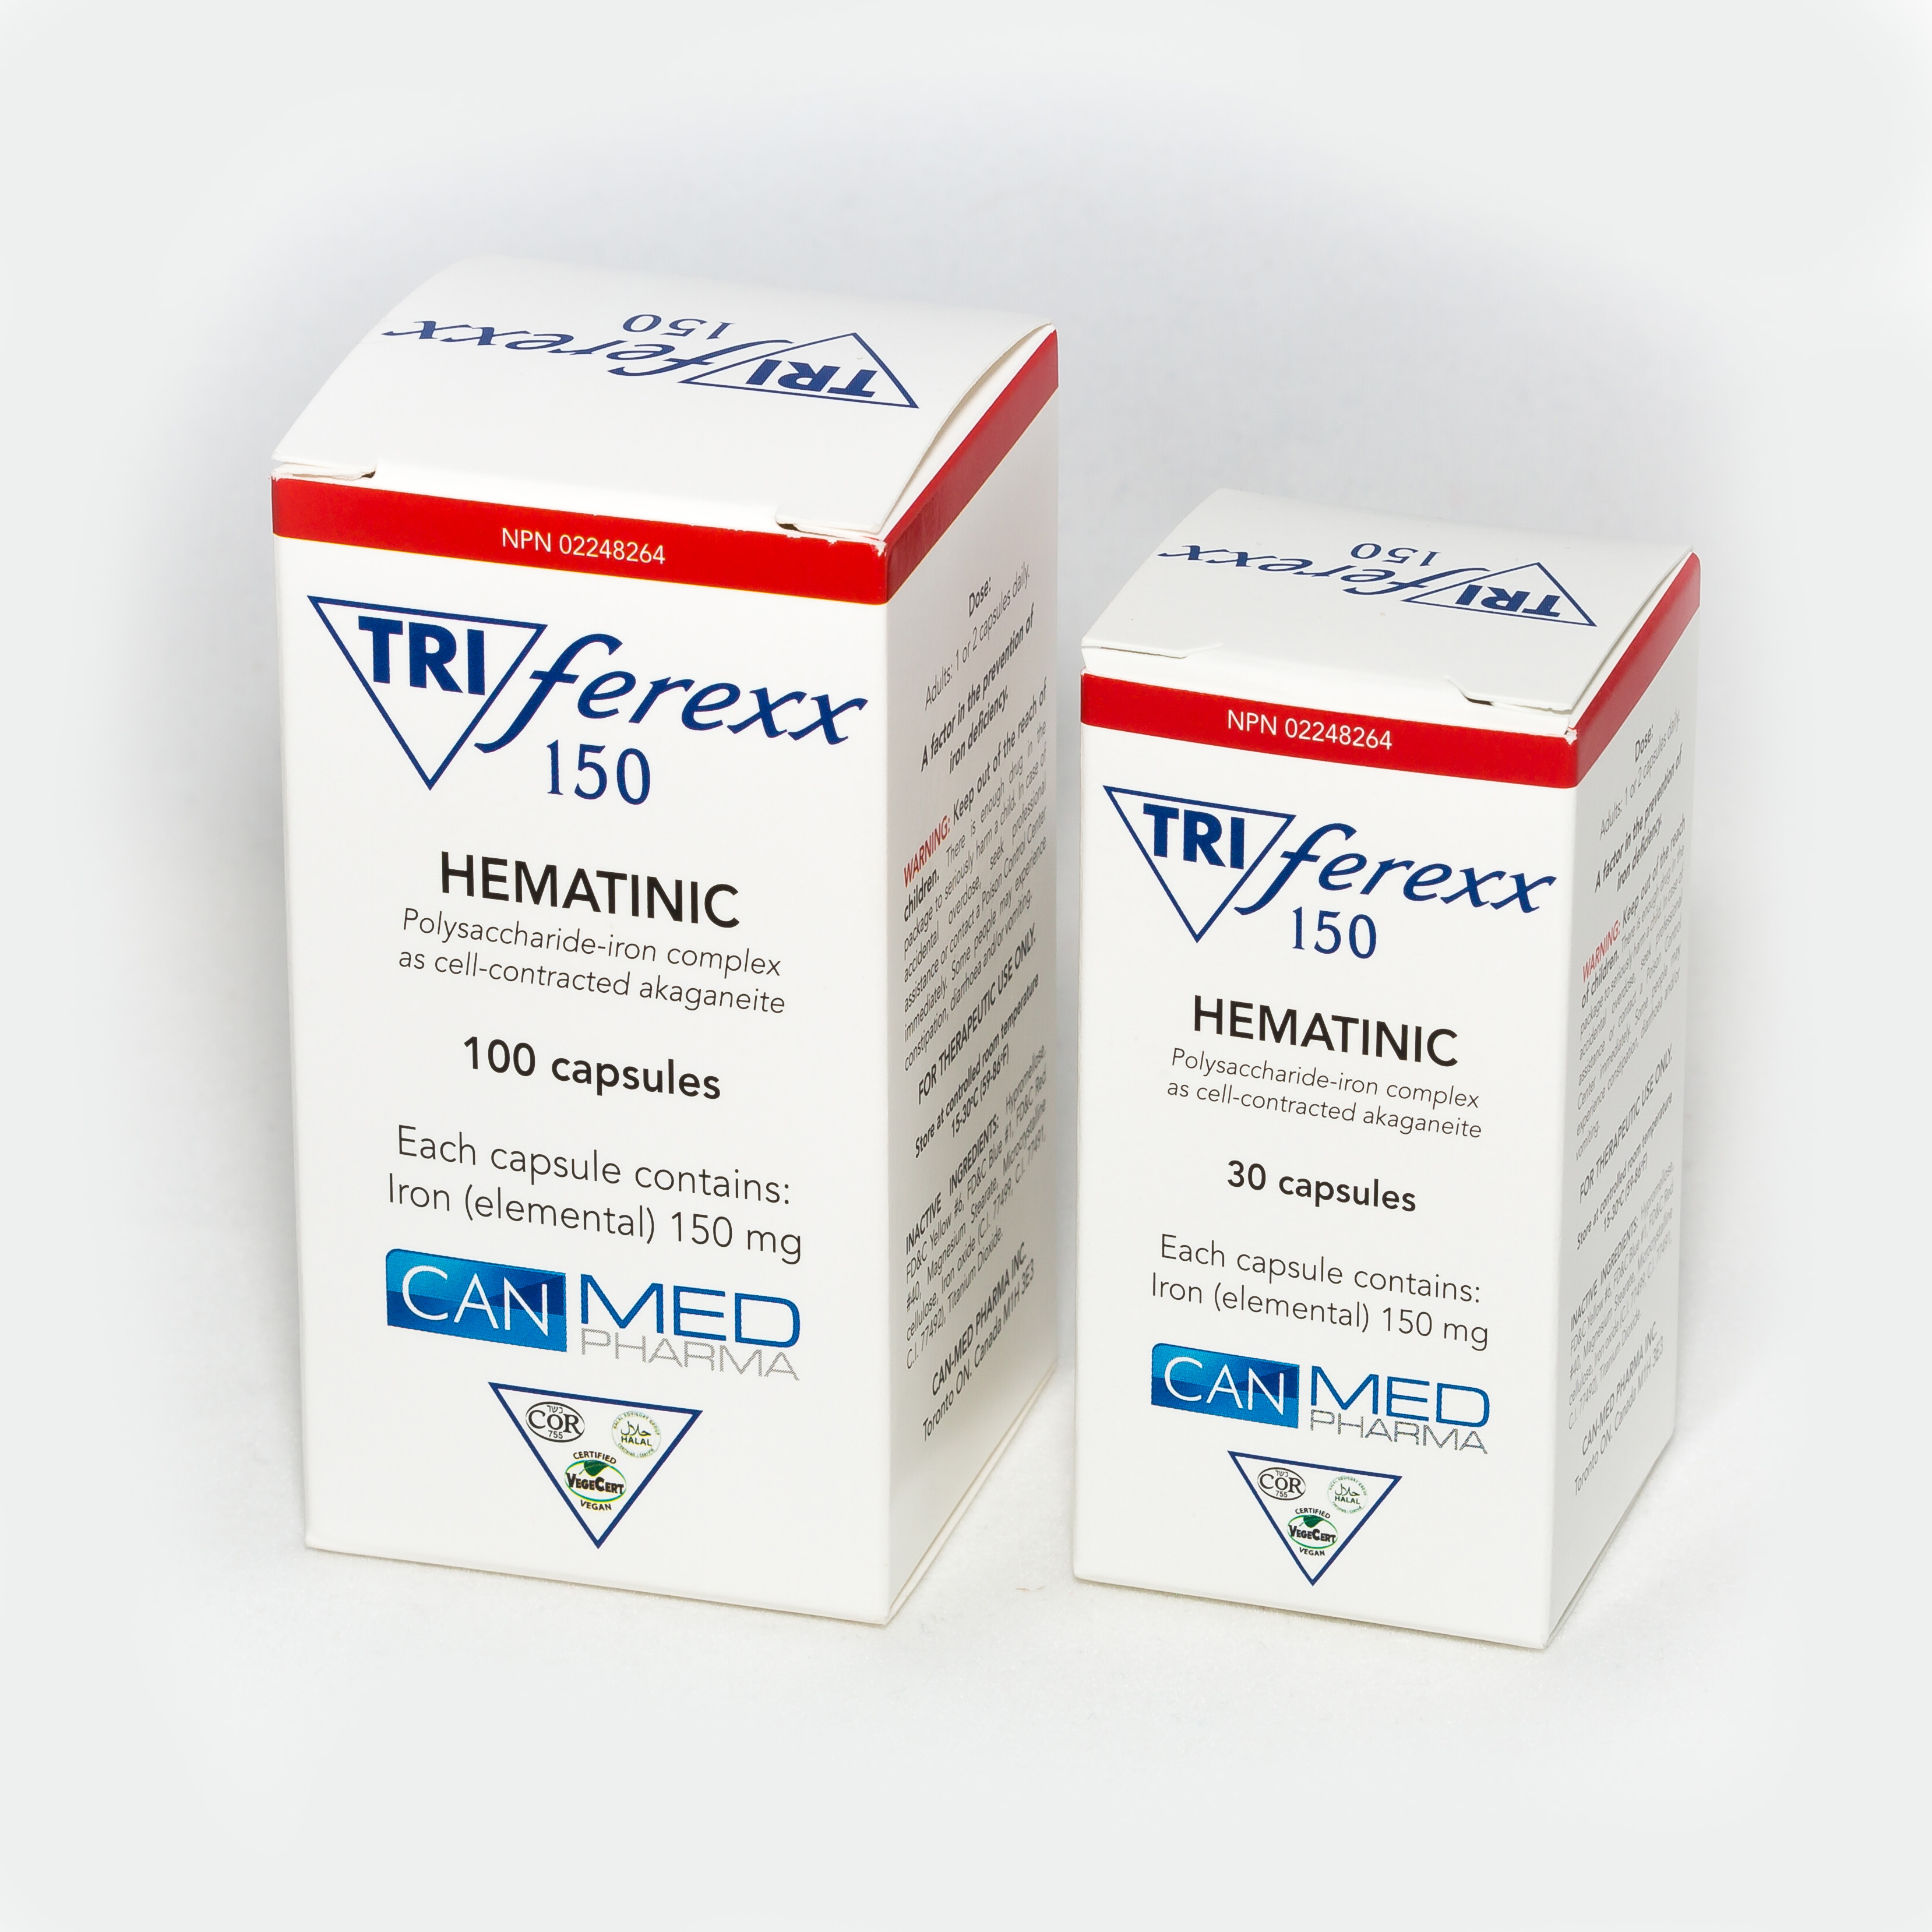 Triferexx English Product Box